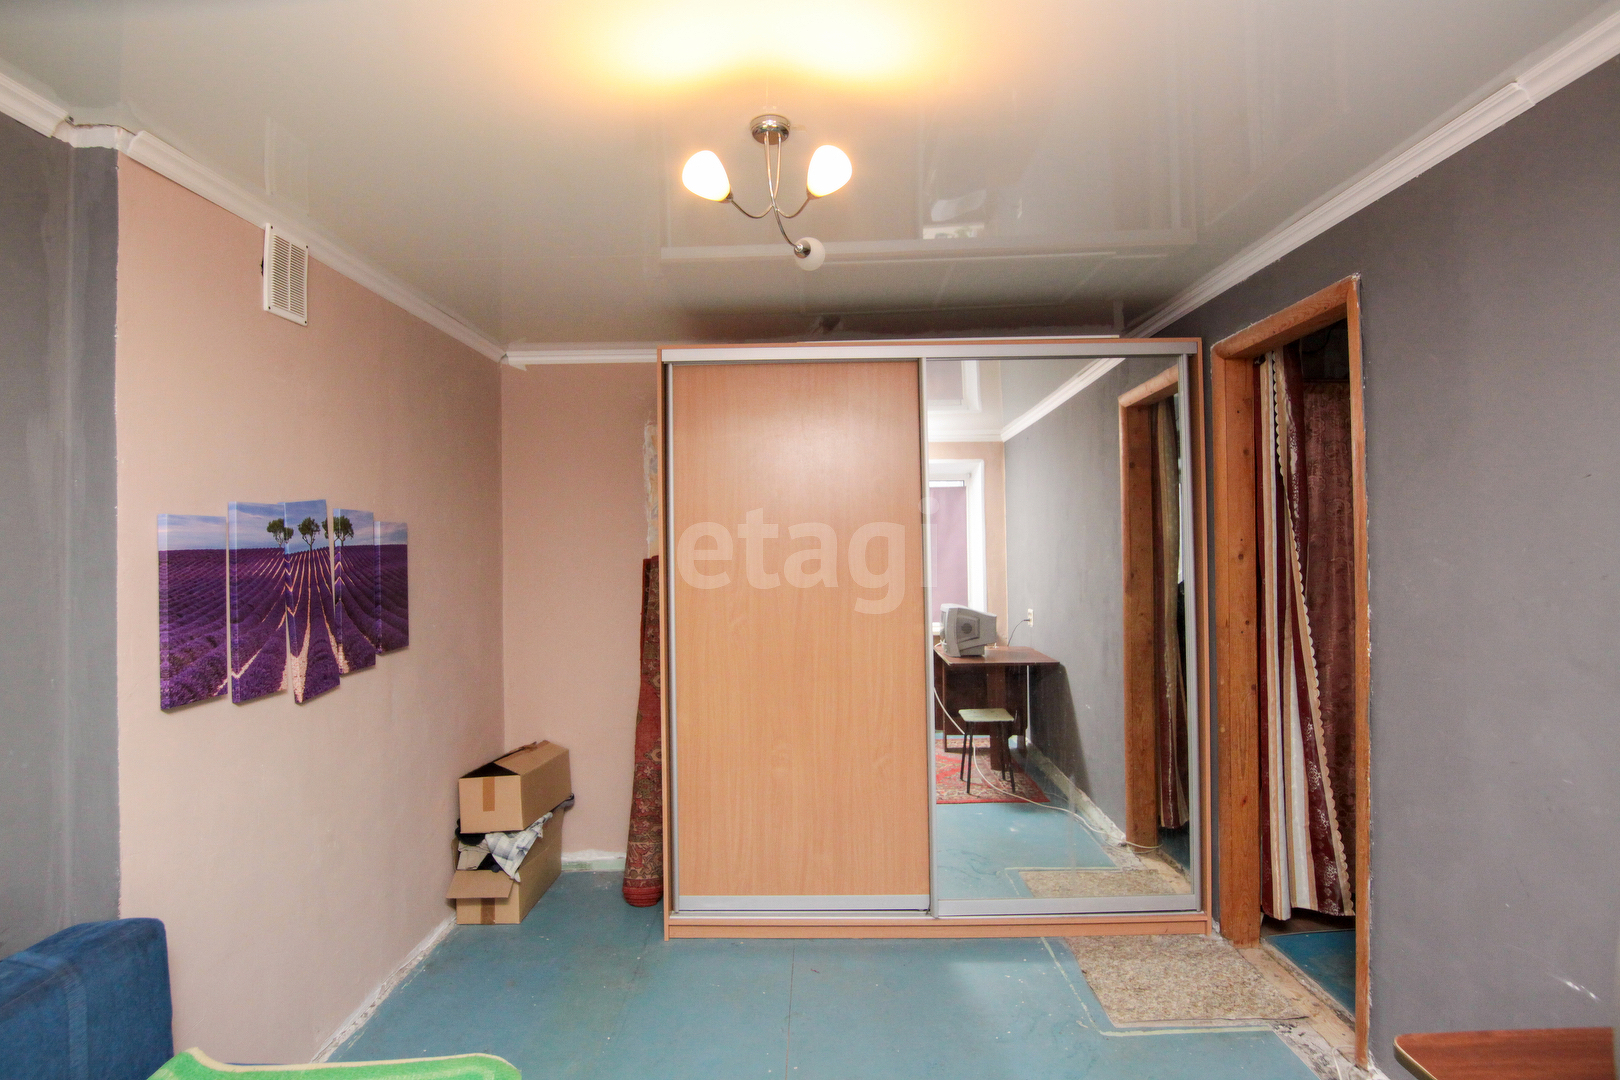 Покупка: квартиры в Челябинске